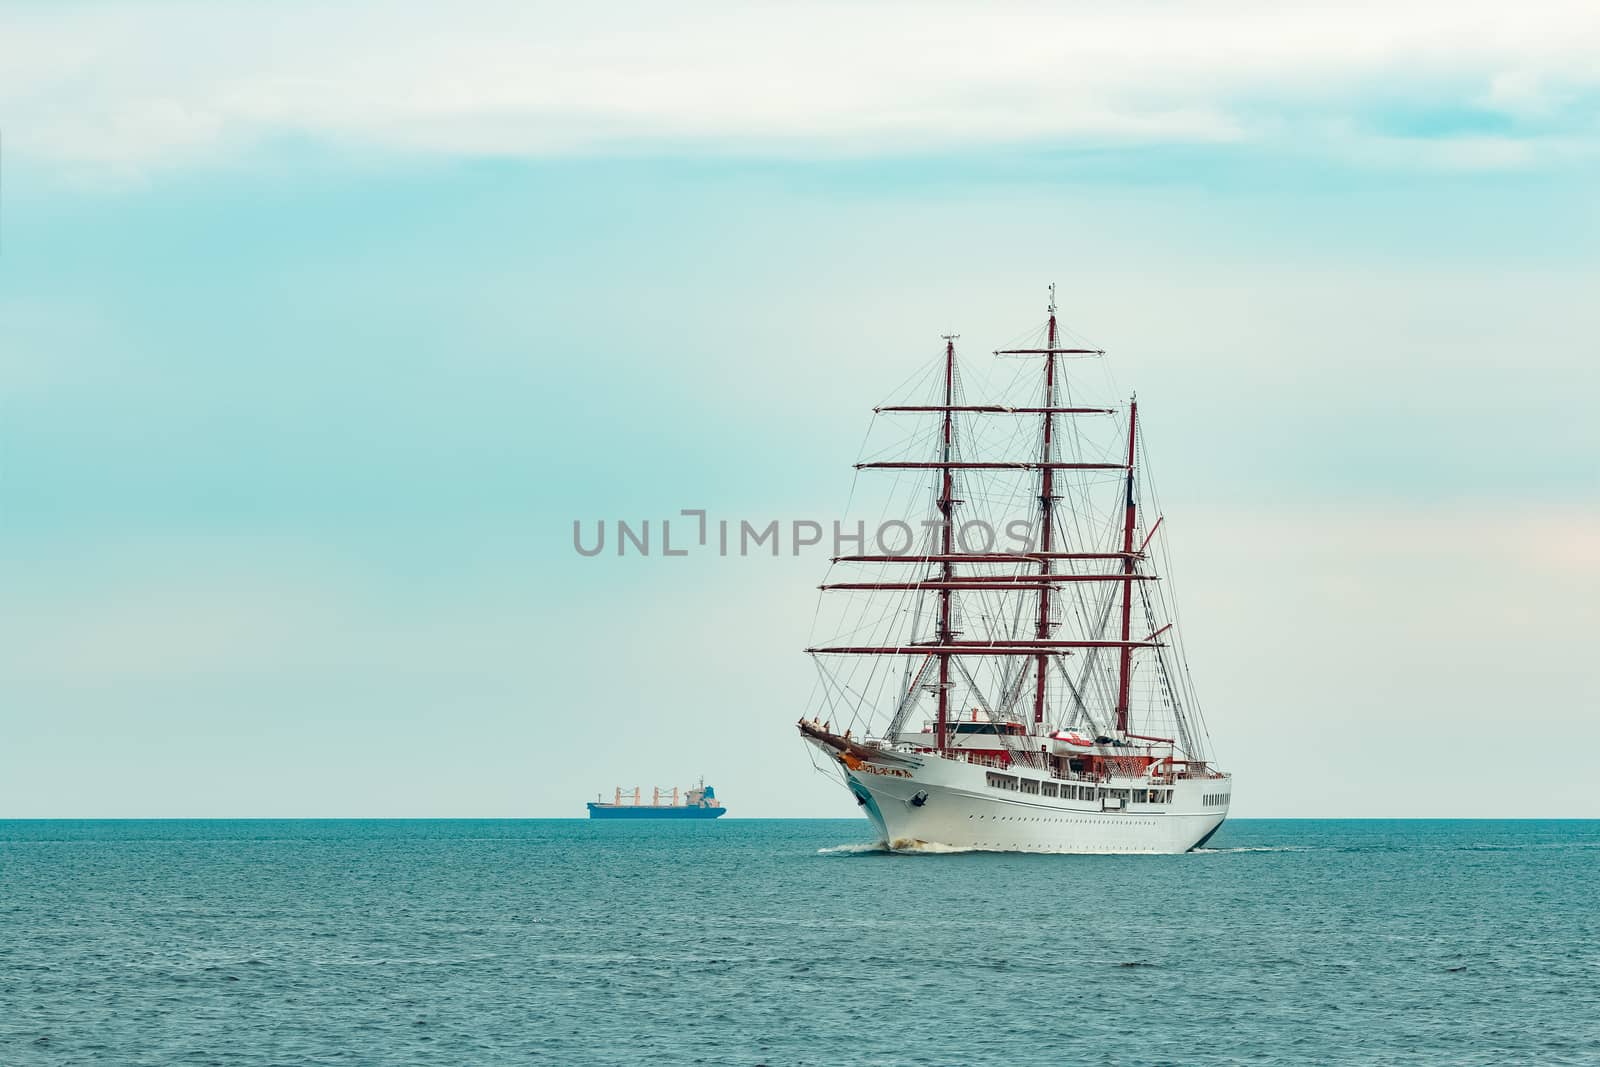 Three mast sailing ship by sengnsp